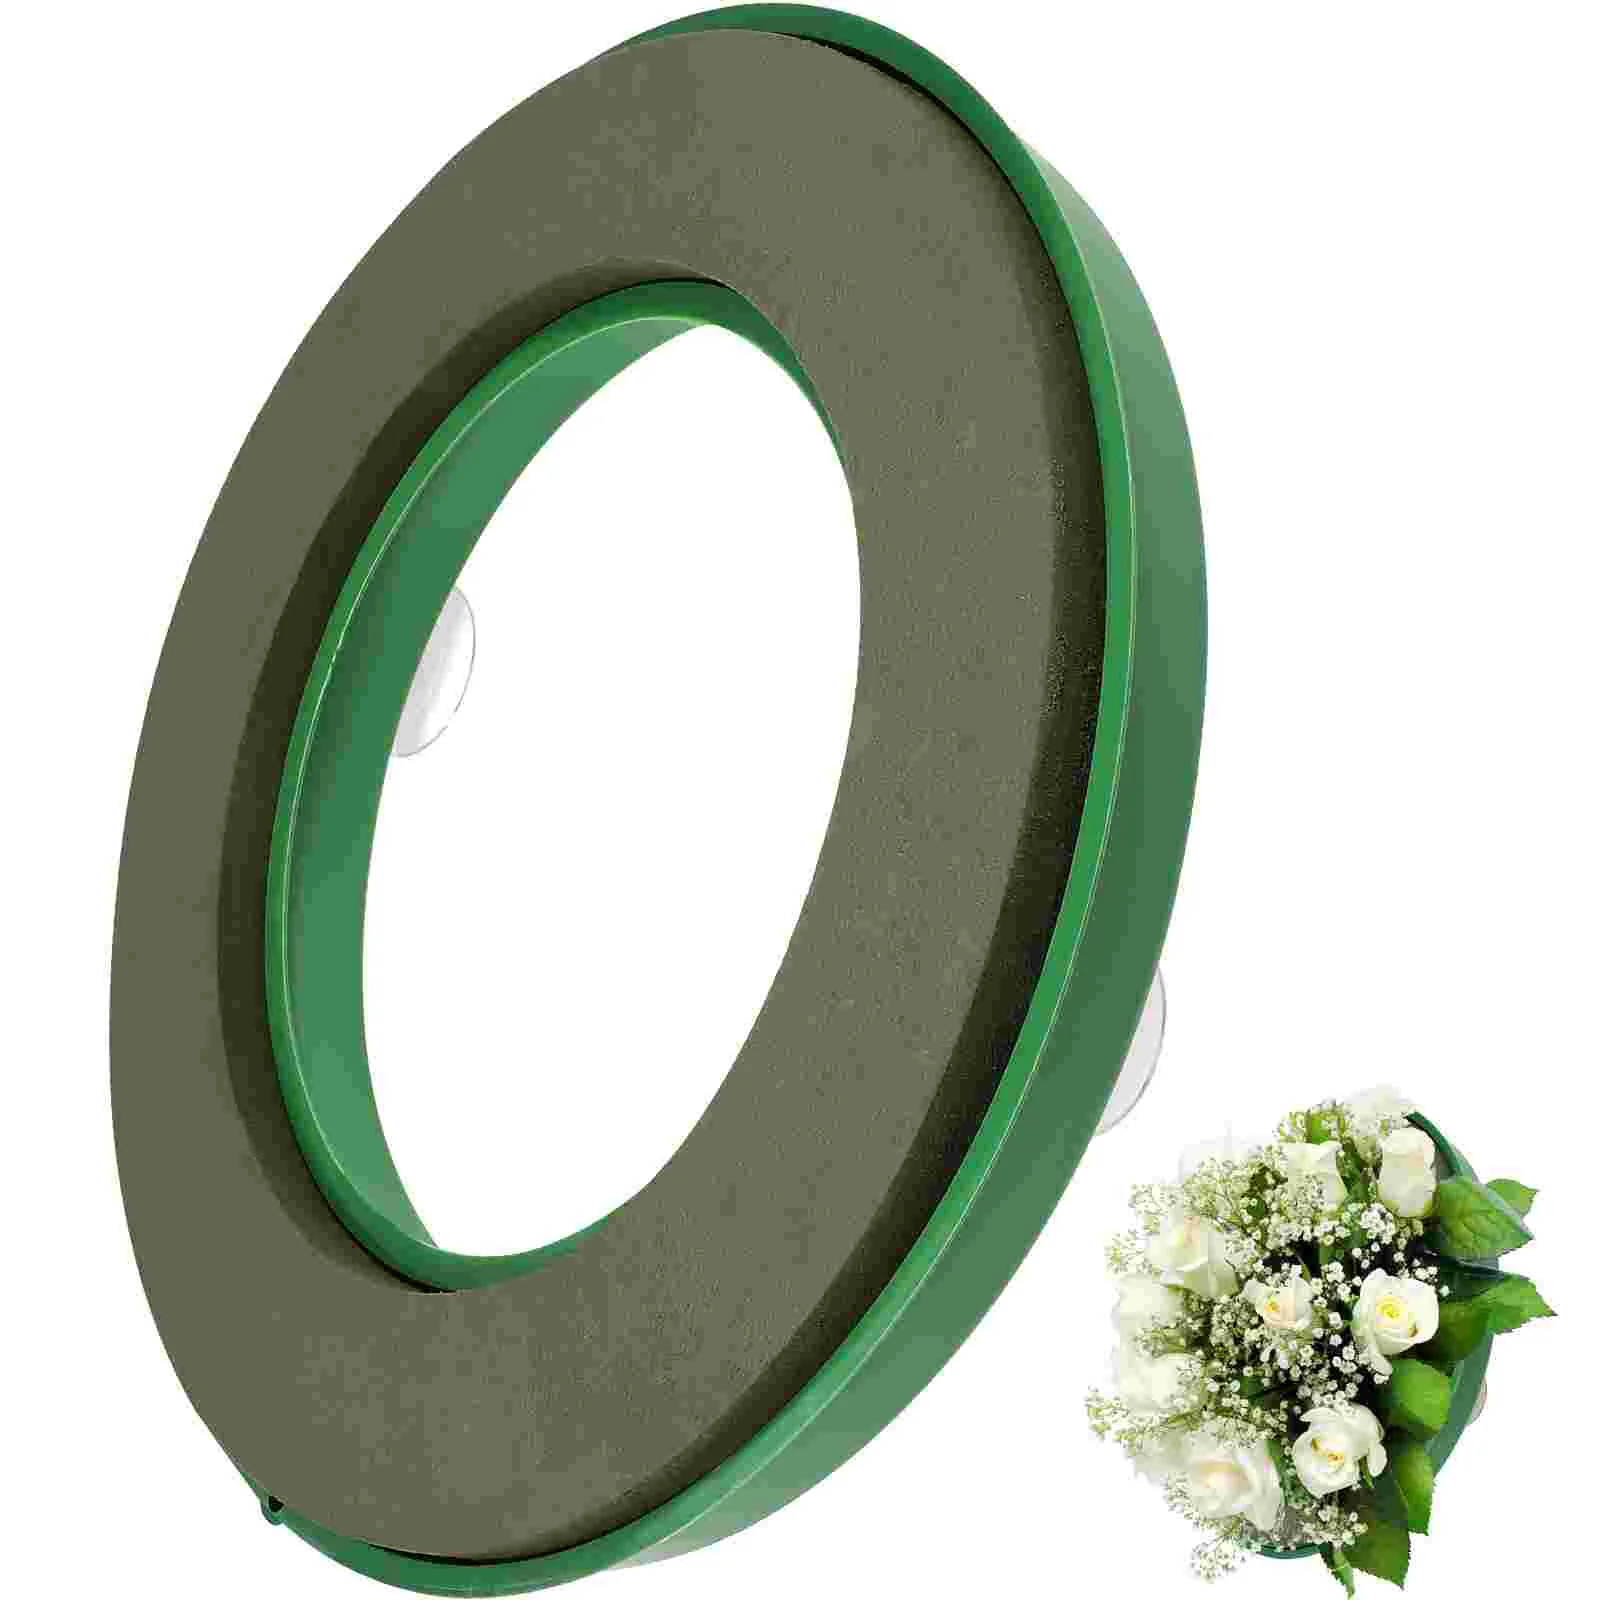 

Mud Plastic Wreath Ring Wedding Car Supplies Foam Block Rings Form Garland Floral